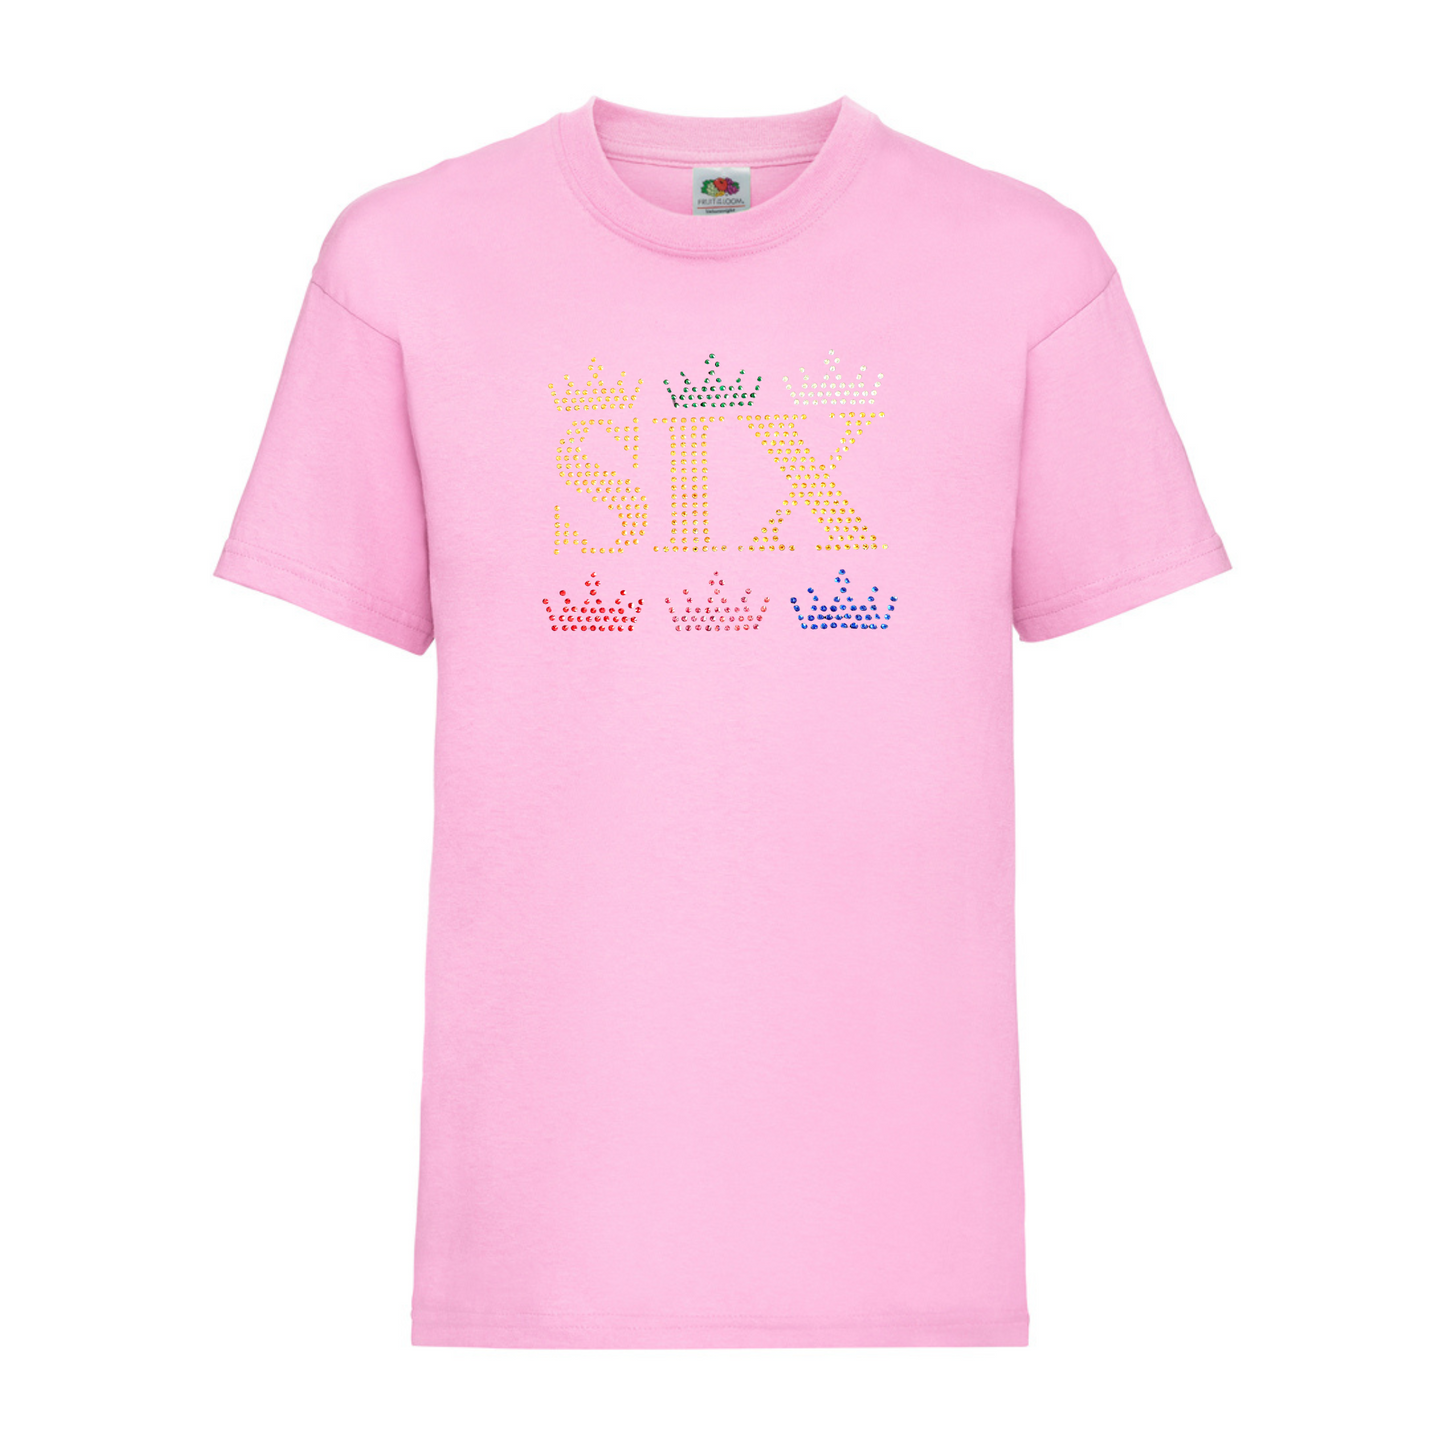 Six the musical cotton Queen crown design T shirt